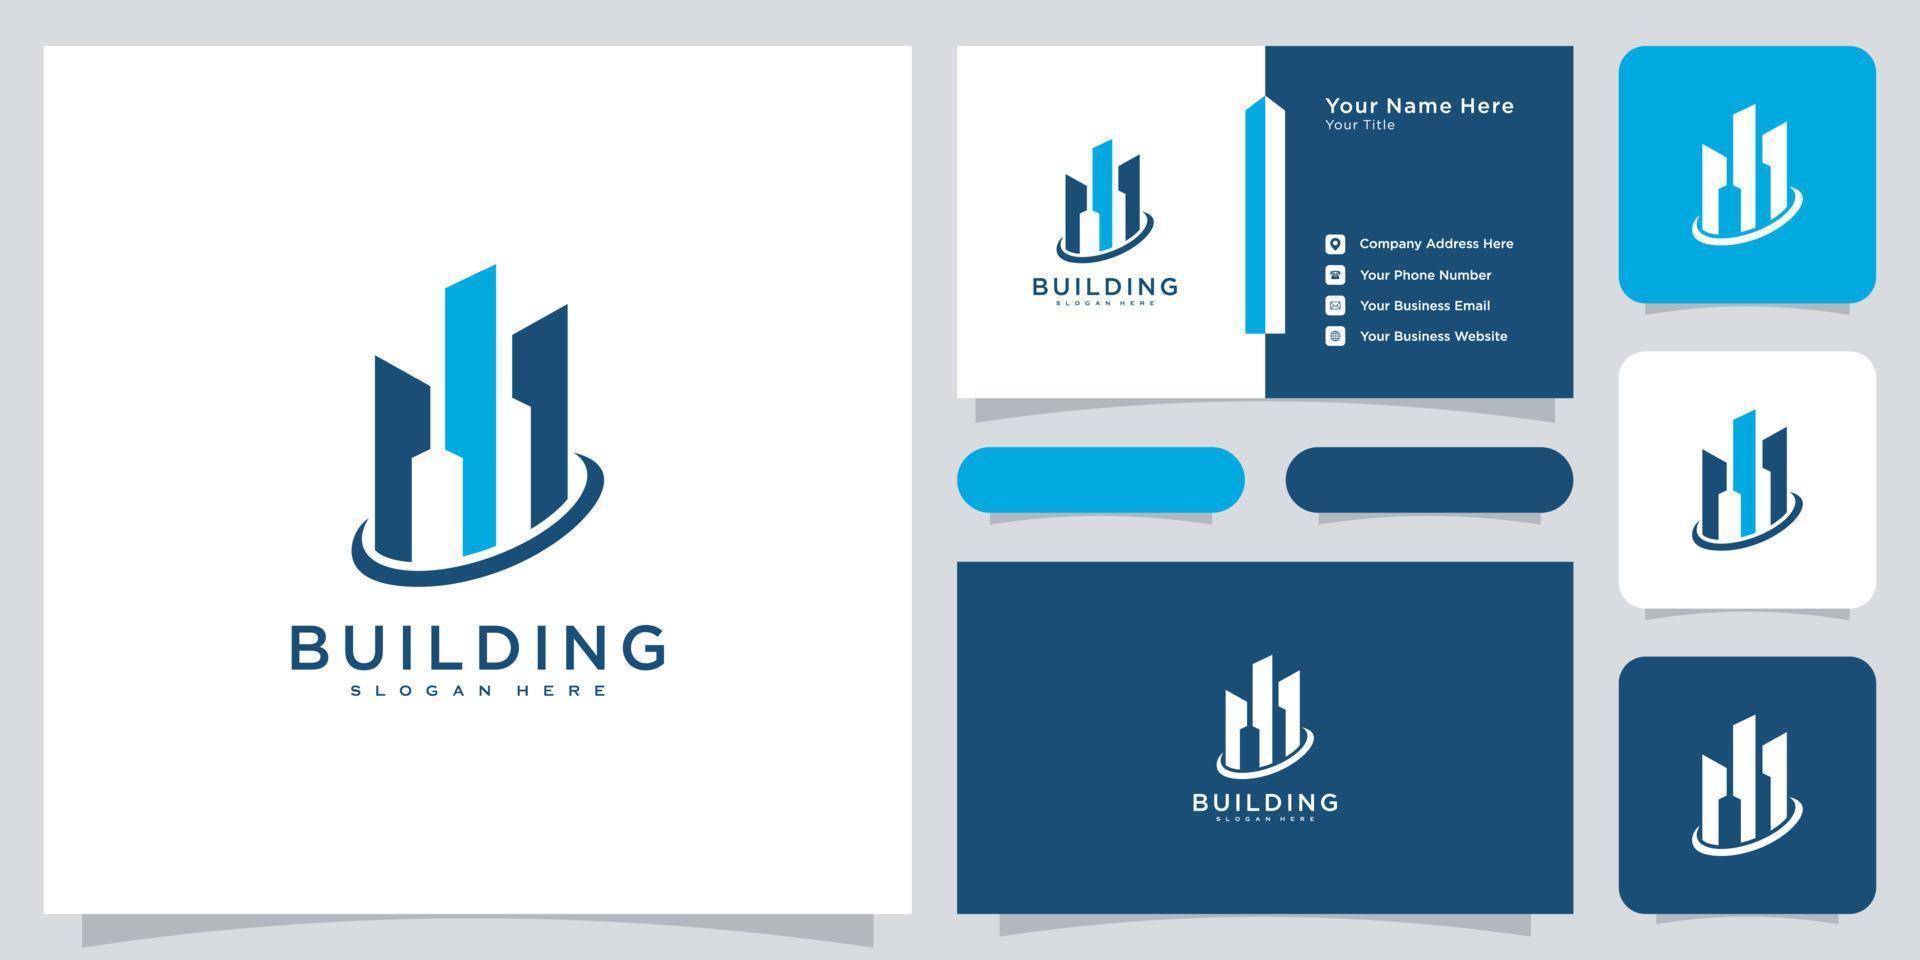 set of Building logo city building for logo design inspiration vector